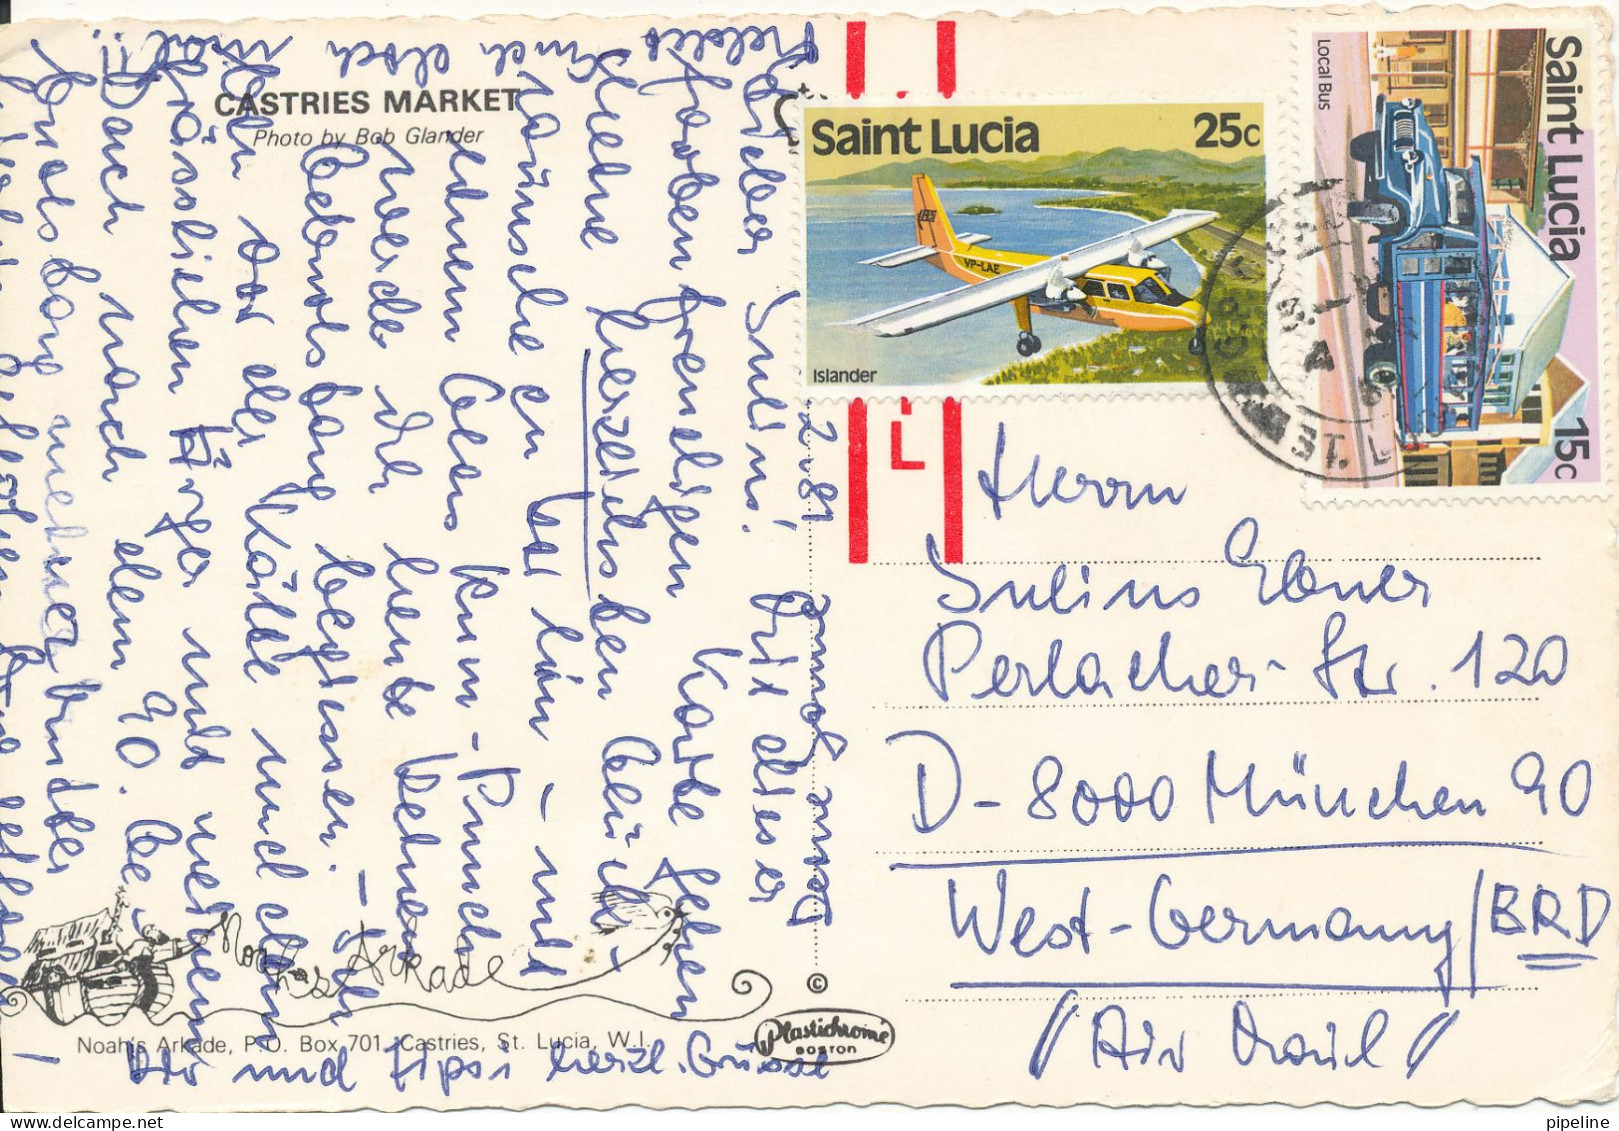 Saint Lucia Postcard Sent To Germany 1981 Castries Market - Santa Lucia